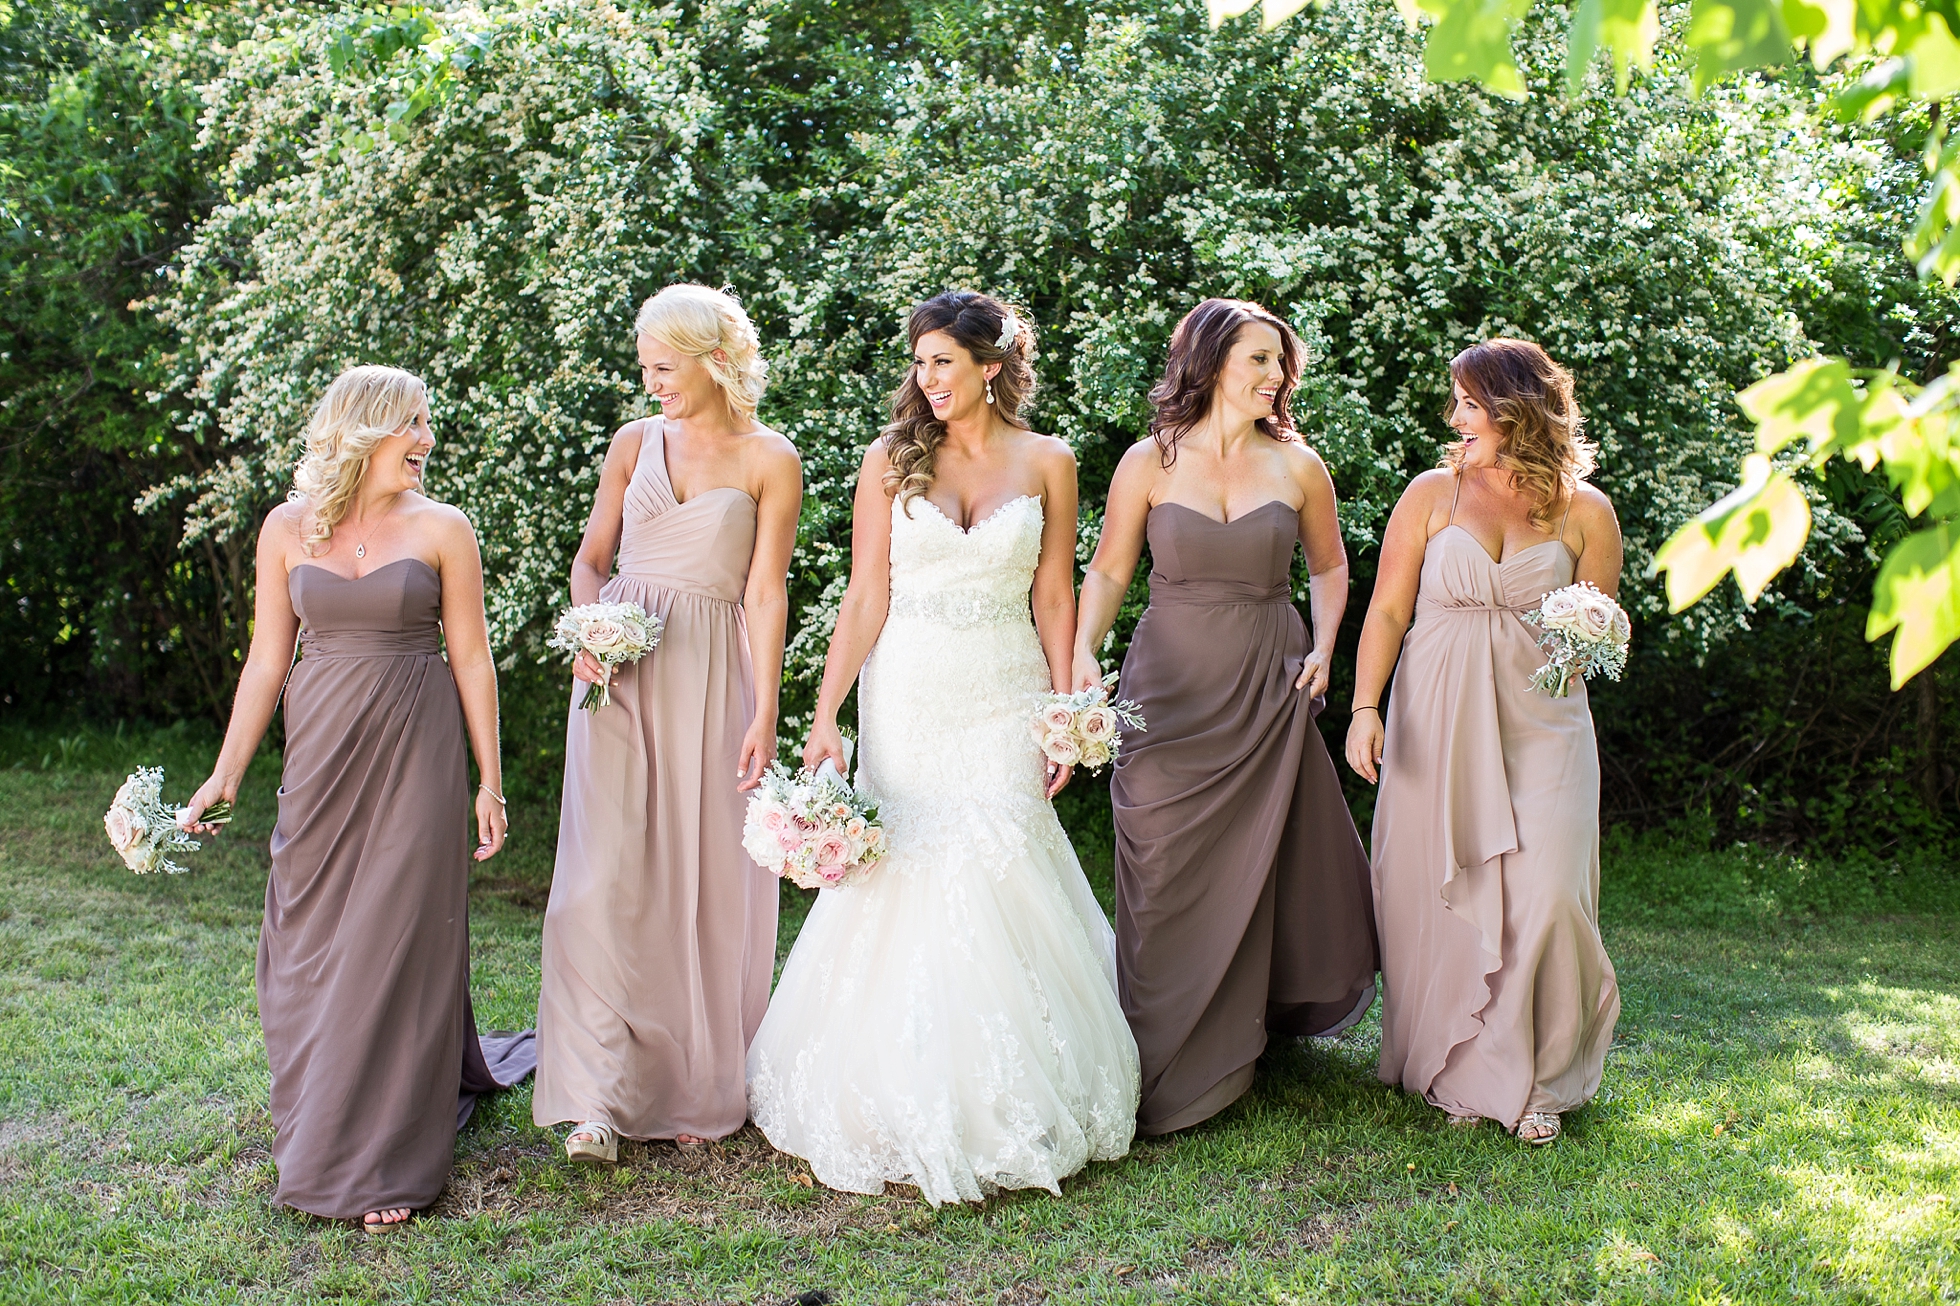 brown beige neutral bridesmaids dresses